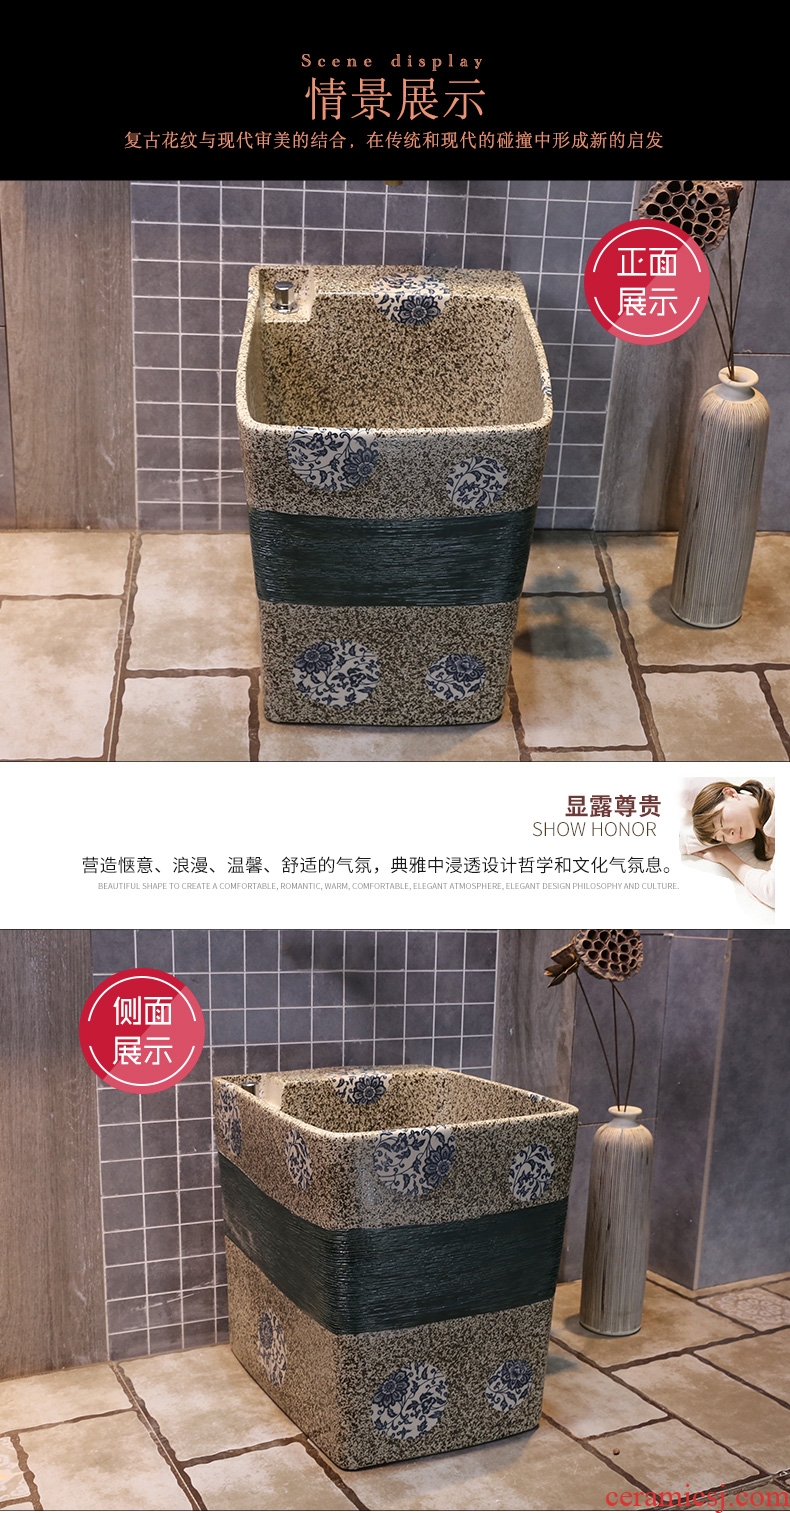 Chinese ceramic art mop pool table JingYan blue circle seal control mop pool bathroom sweep the floor mop pool balcony